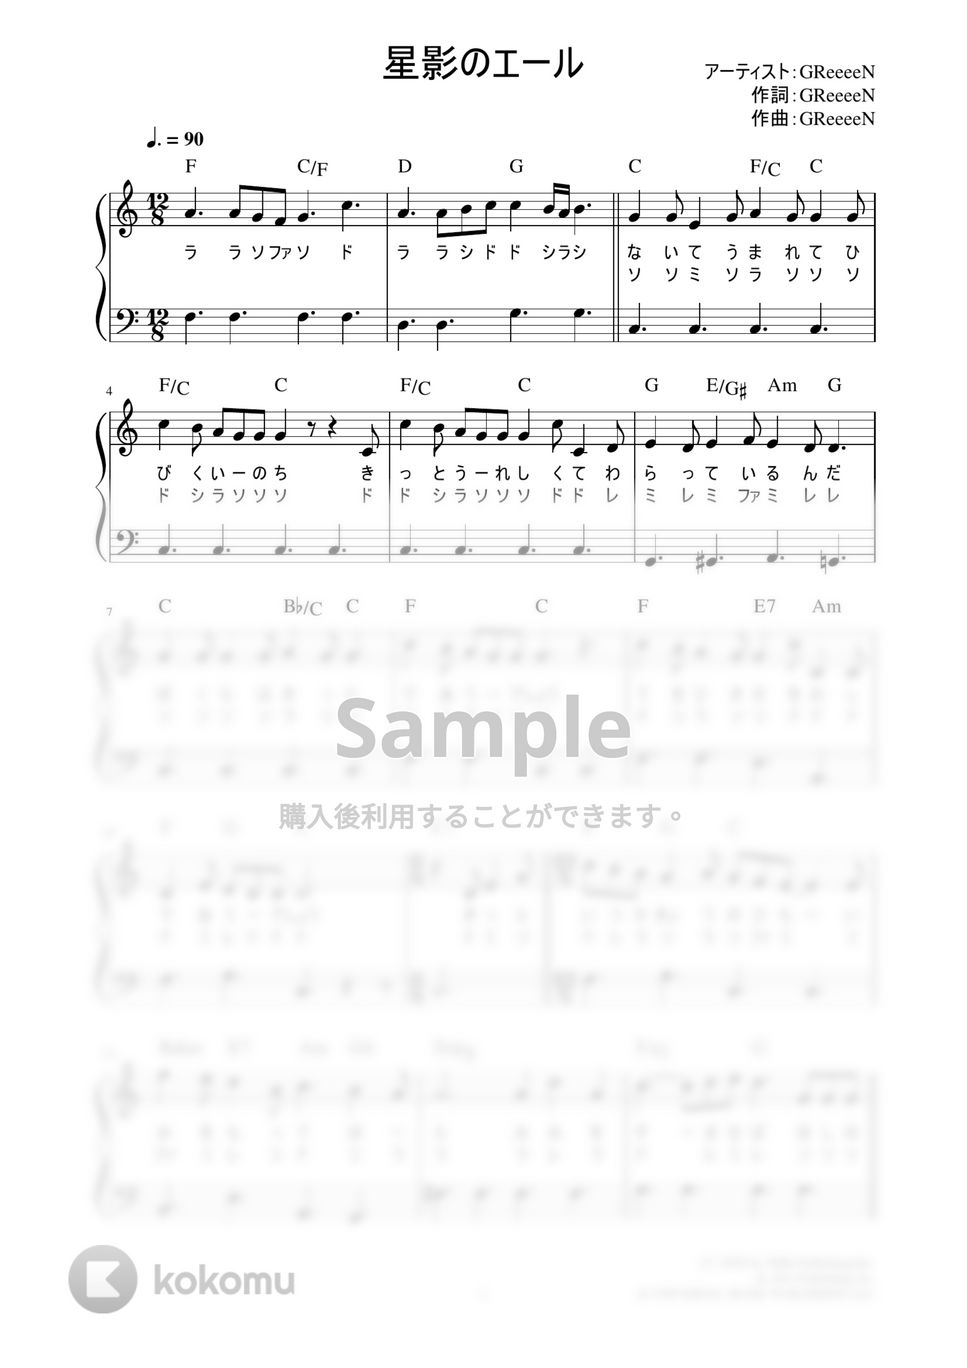 GReeeeN - 星影のエール (かんたん / 歌詞付き / ドレミ付き / 初心者) by piano.tokyo